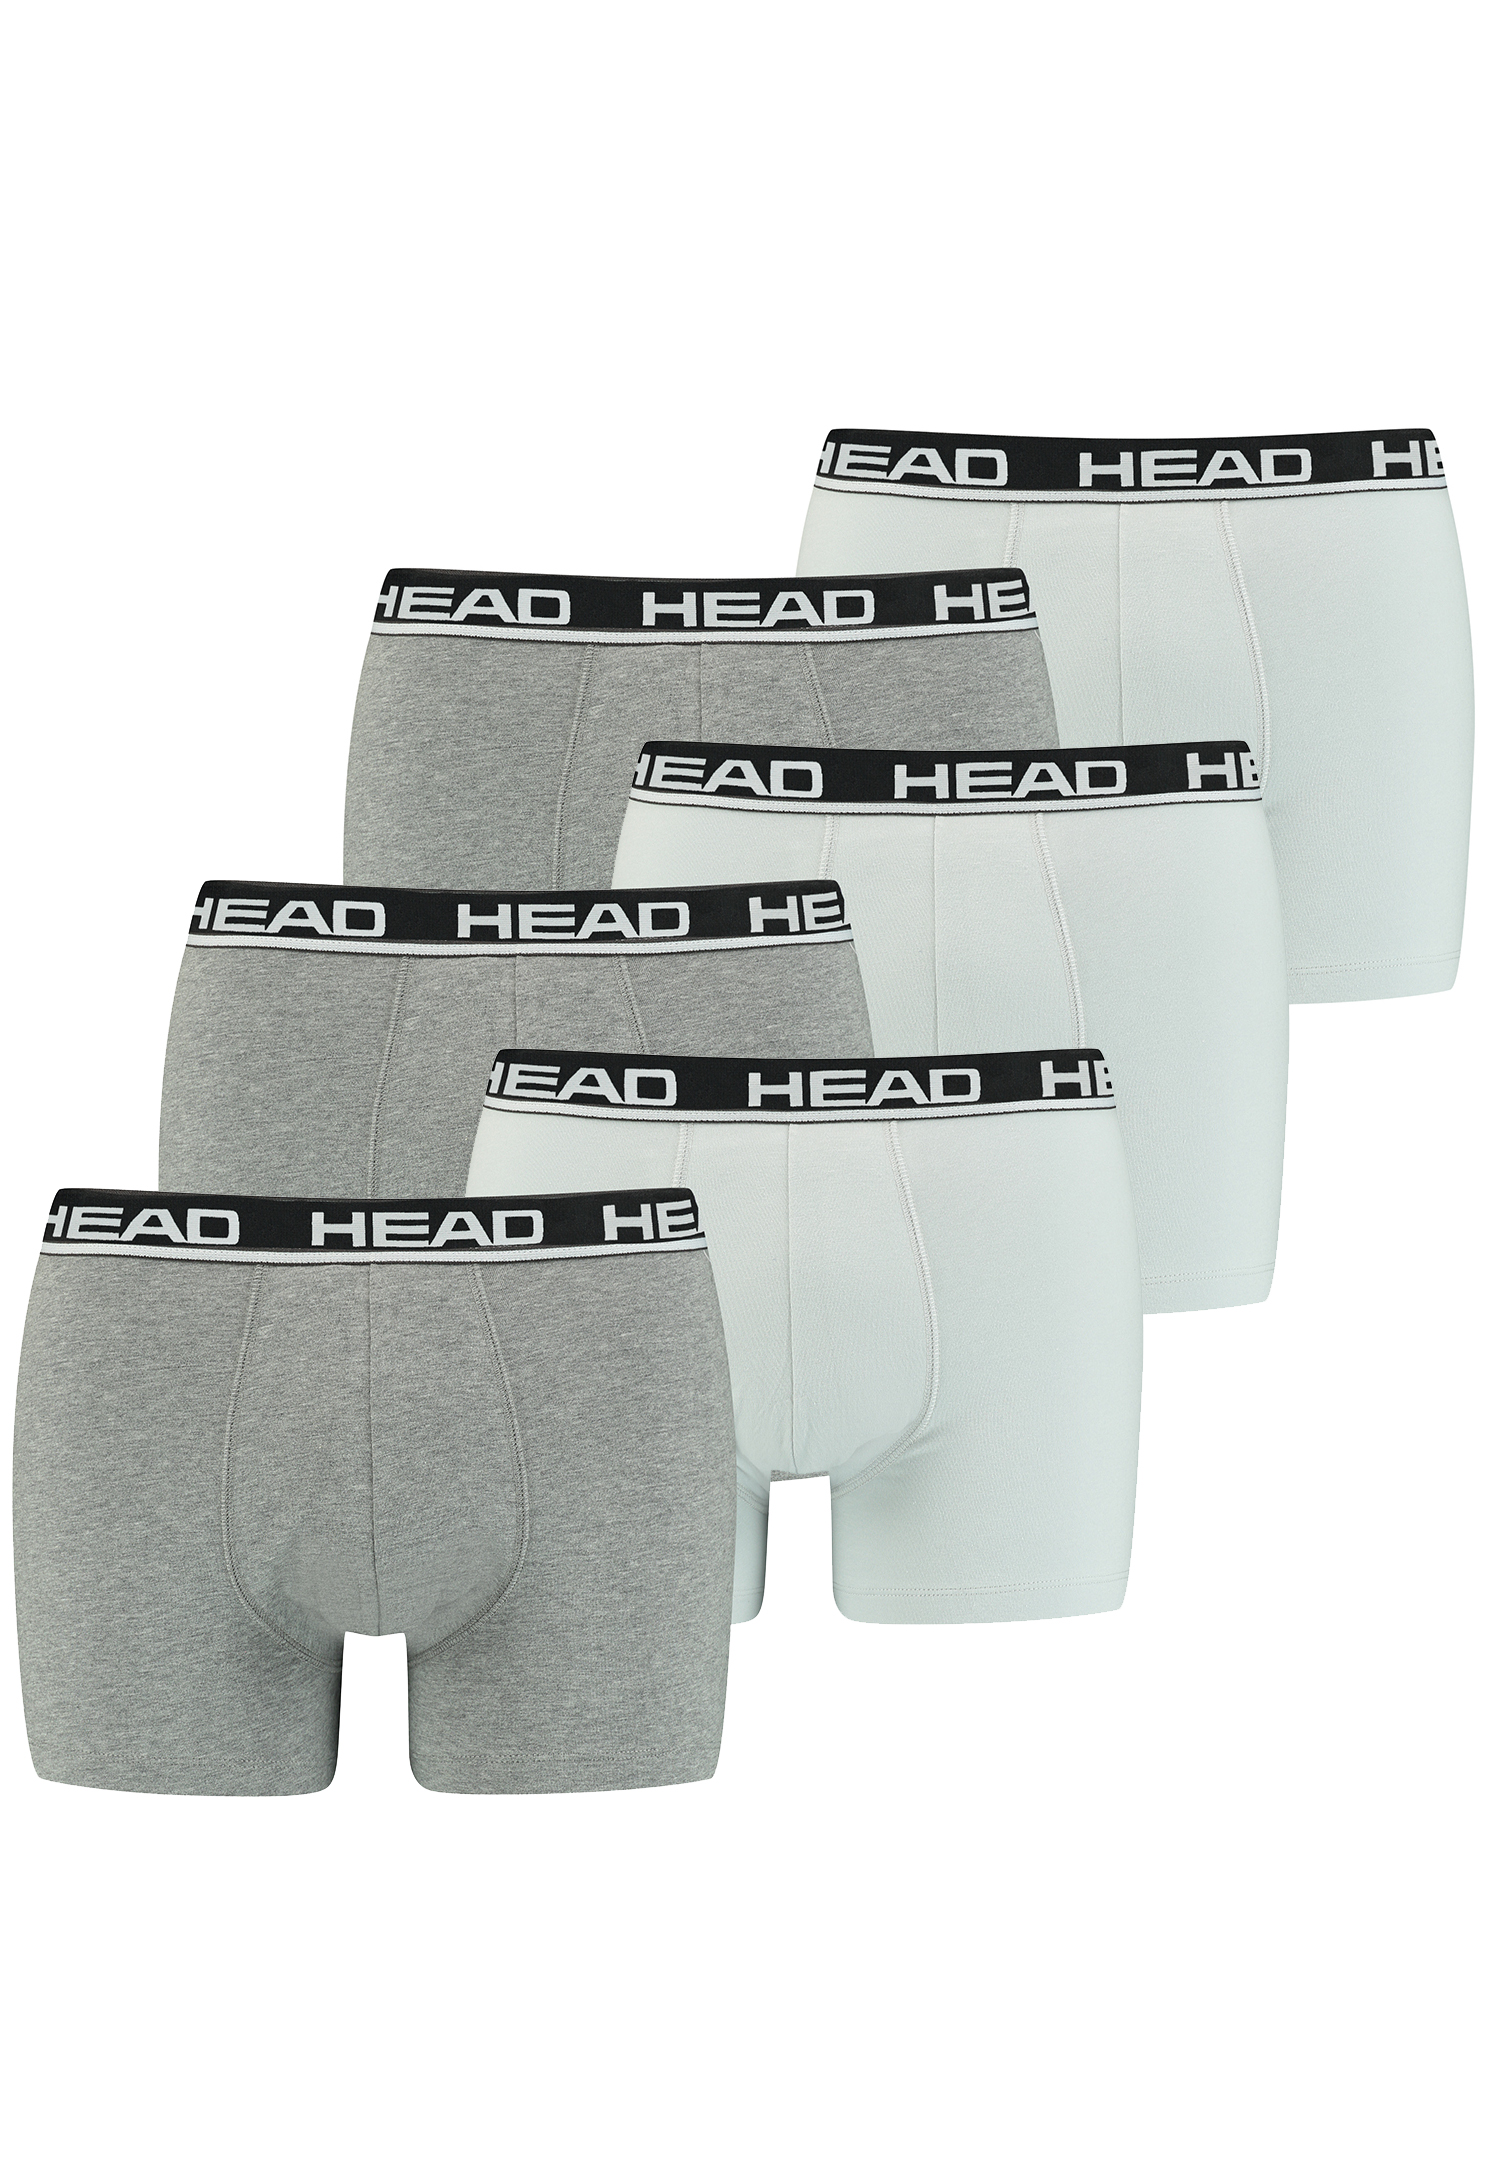 Head Herren Basic Boxer Pant Shorts Unterwäsche Unterhose 6 er Pack